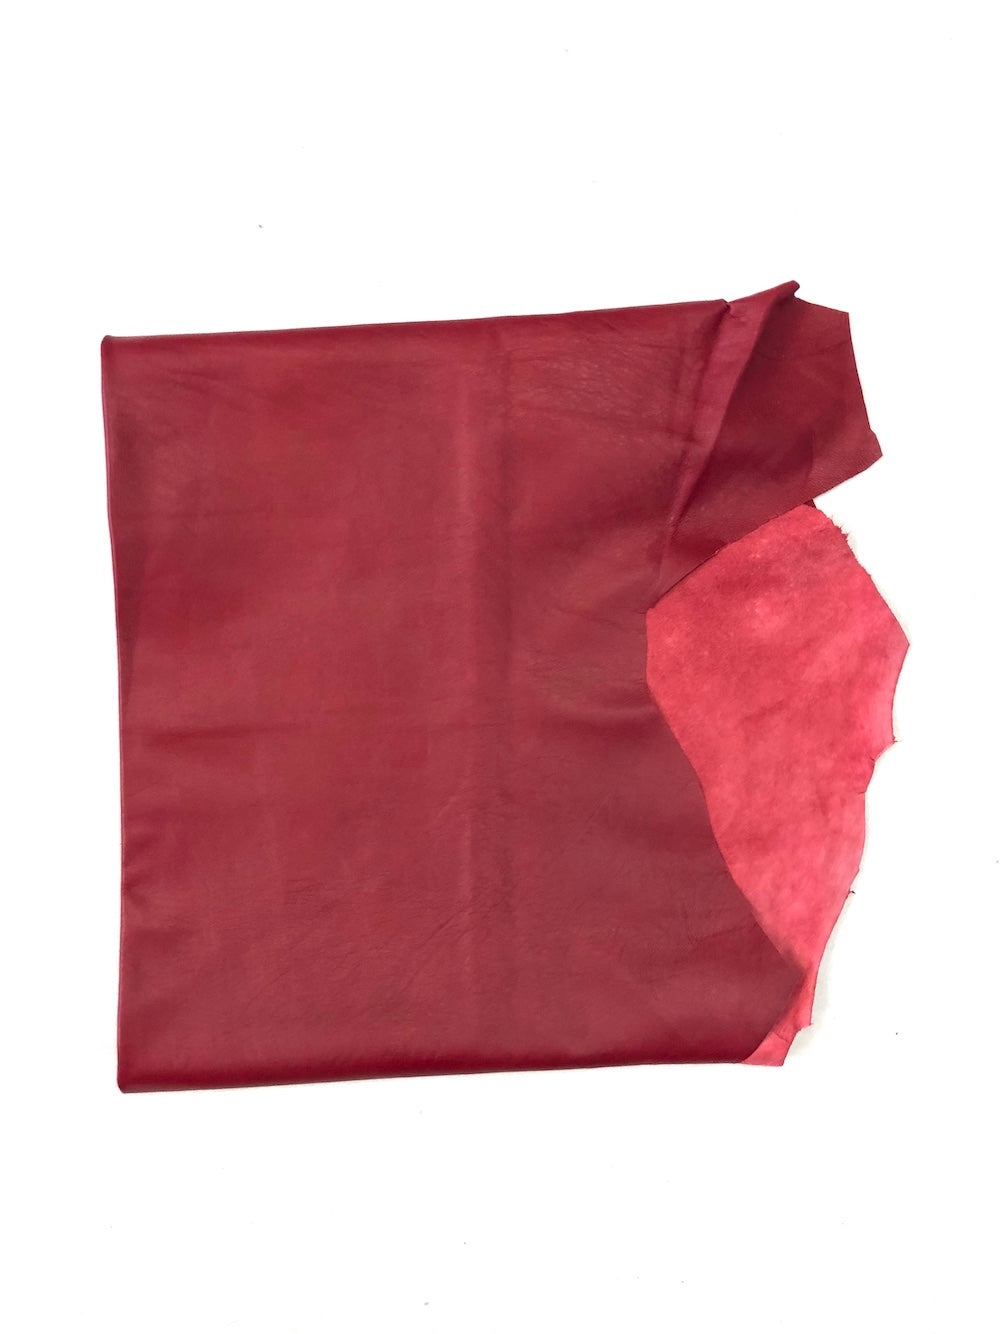 Red Italian Leather - SL Fur & Leather